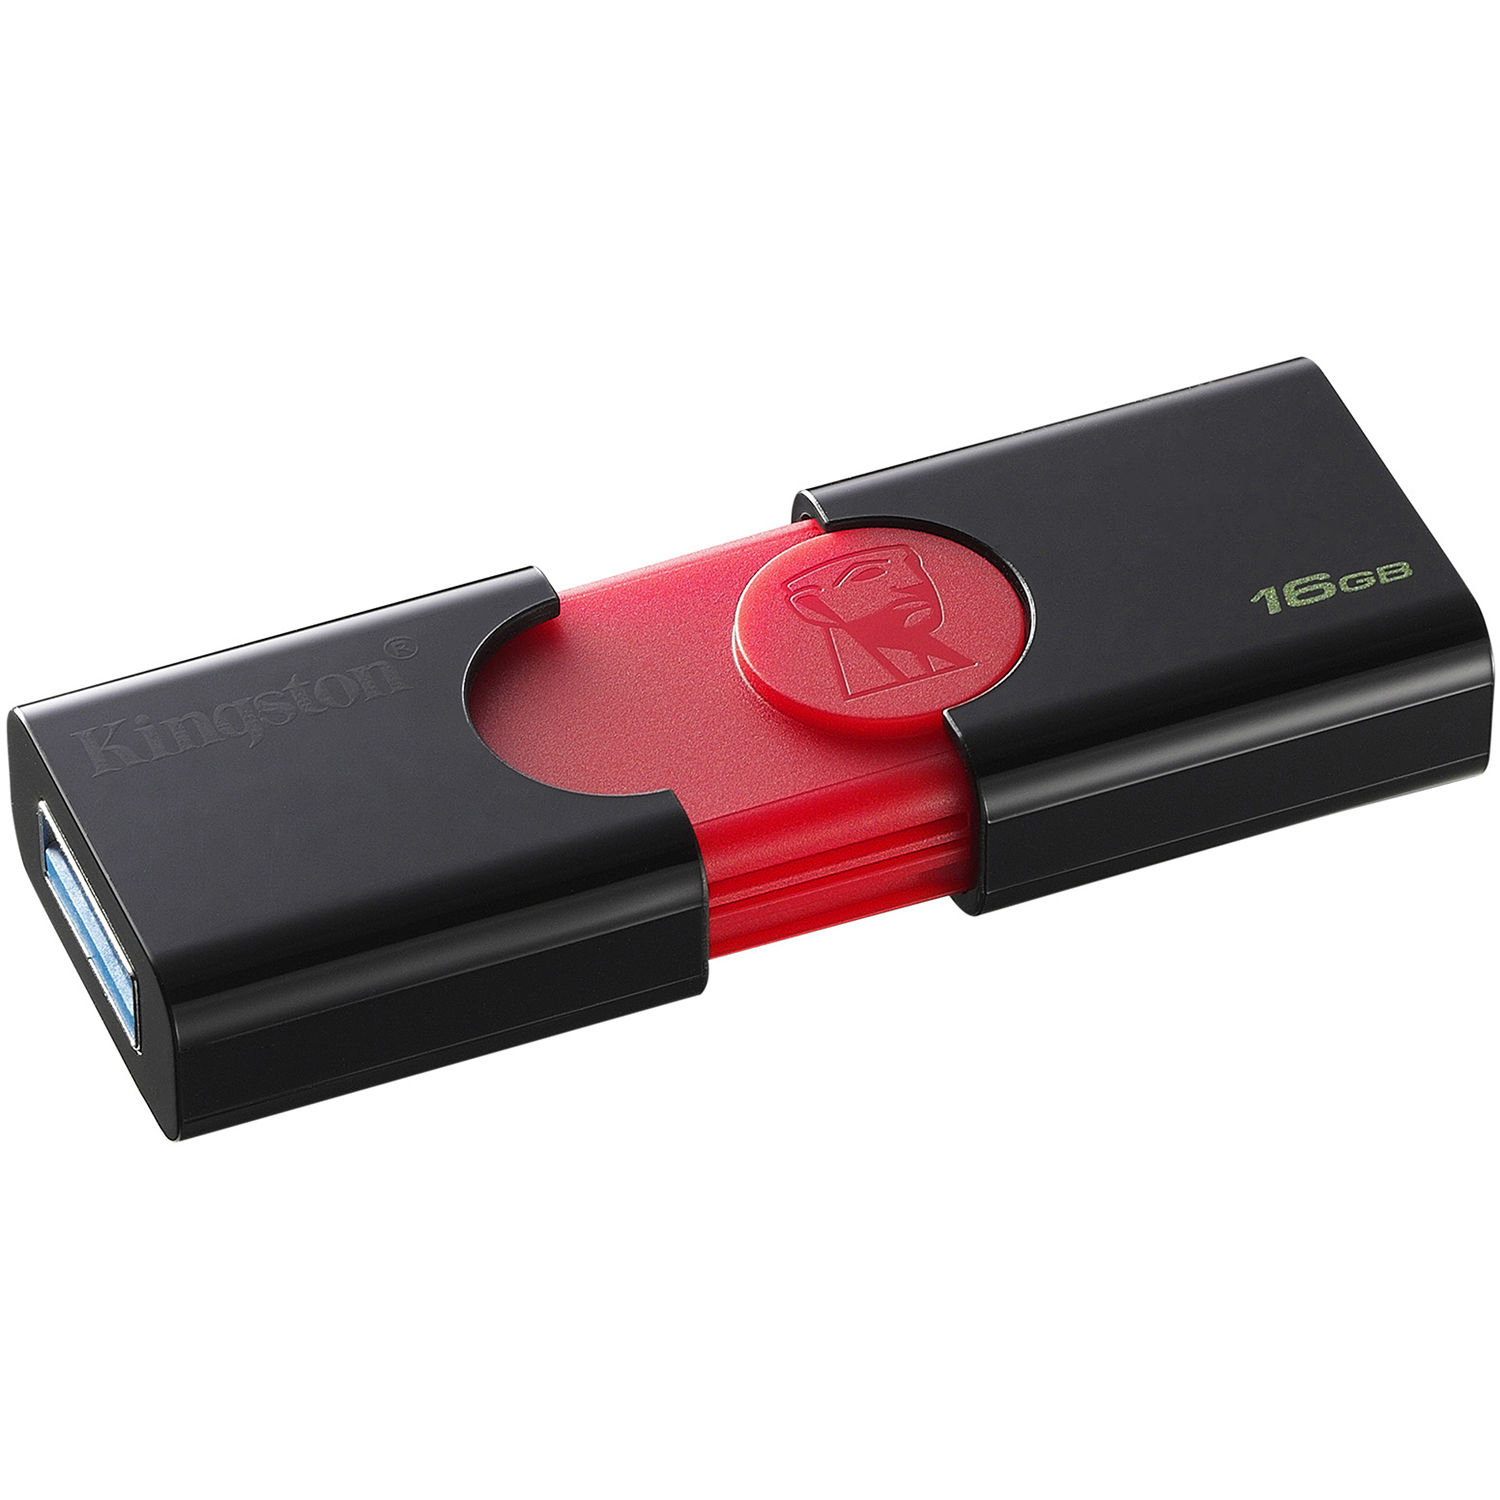 Original Kingston DataTraveler 106 16GB USB 3.0 Flash Drive (DT106/16GB)